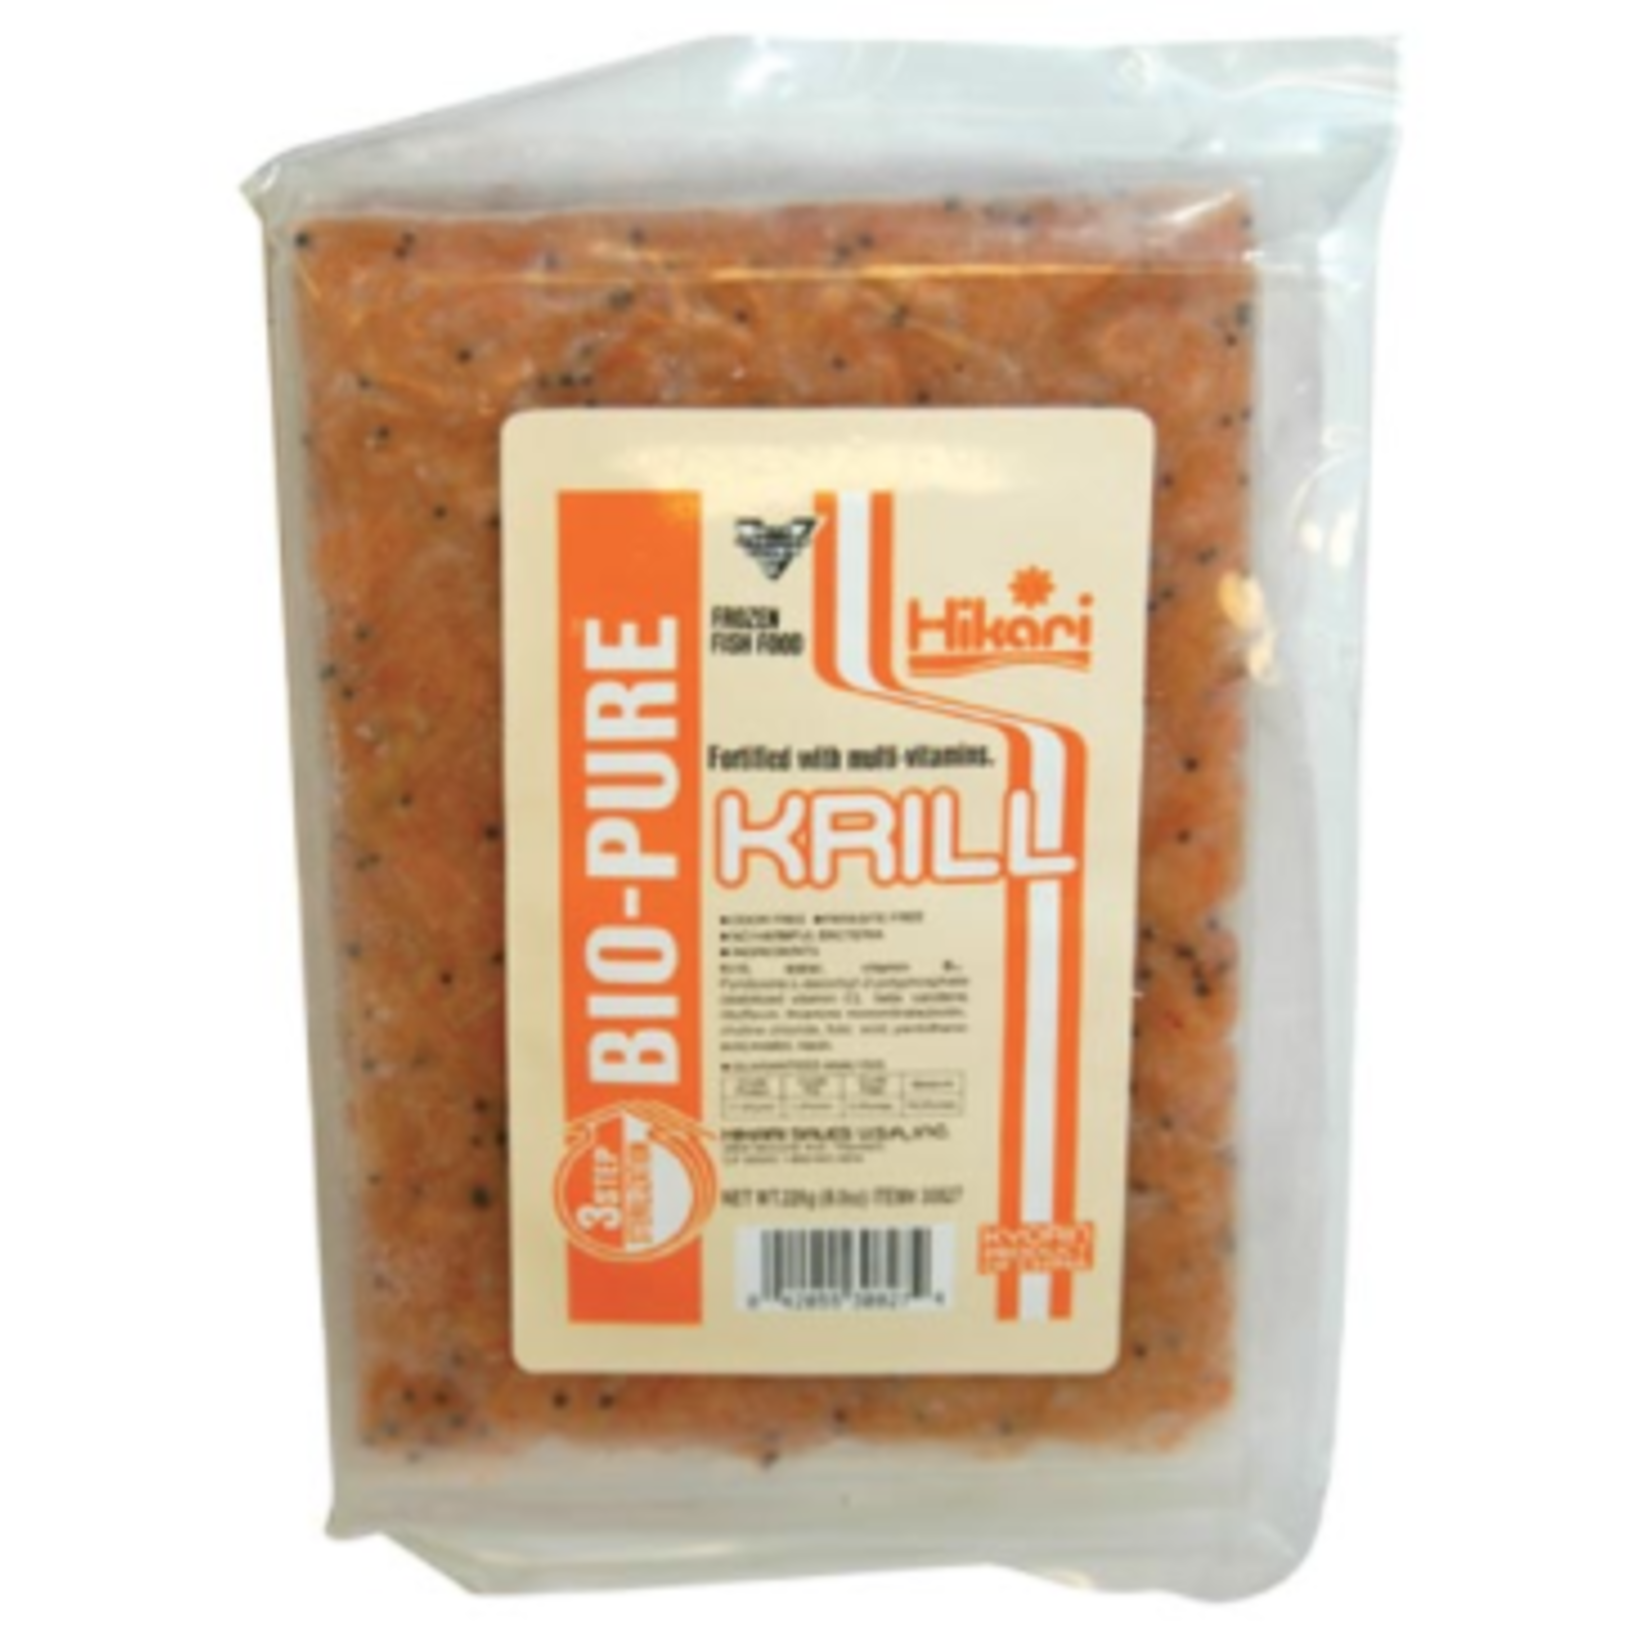 Hikari Bio-Pure Frozen Krill - Flatpack - 8 oz - Rick's Pet Stores